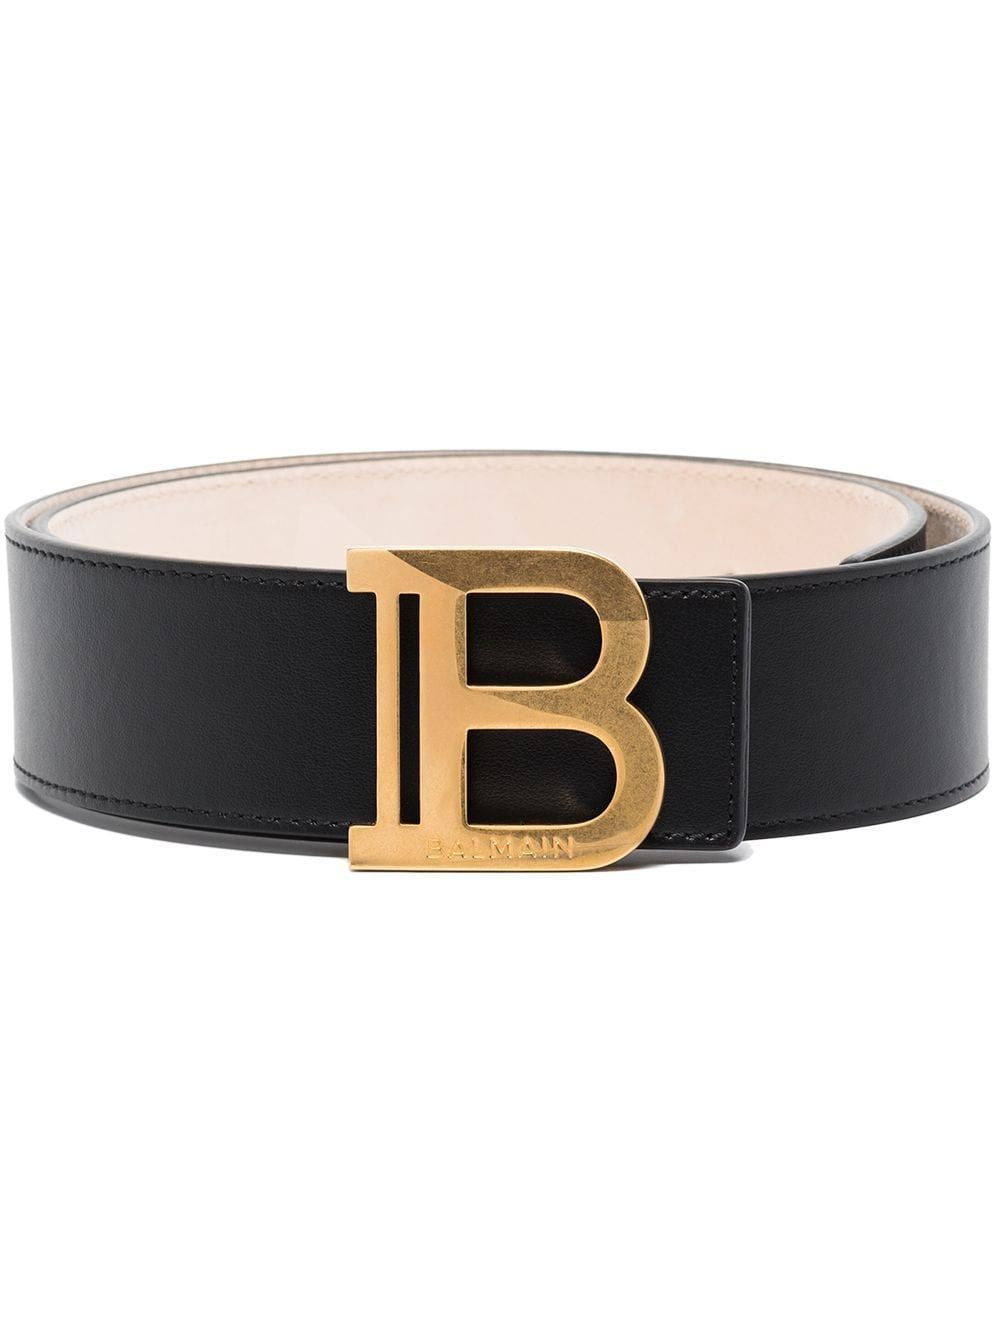 BALMAIN Stylish B-Belt for Women - SS22 Collection